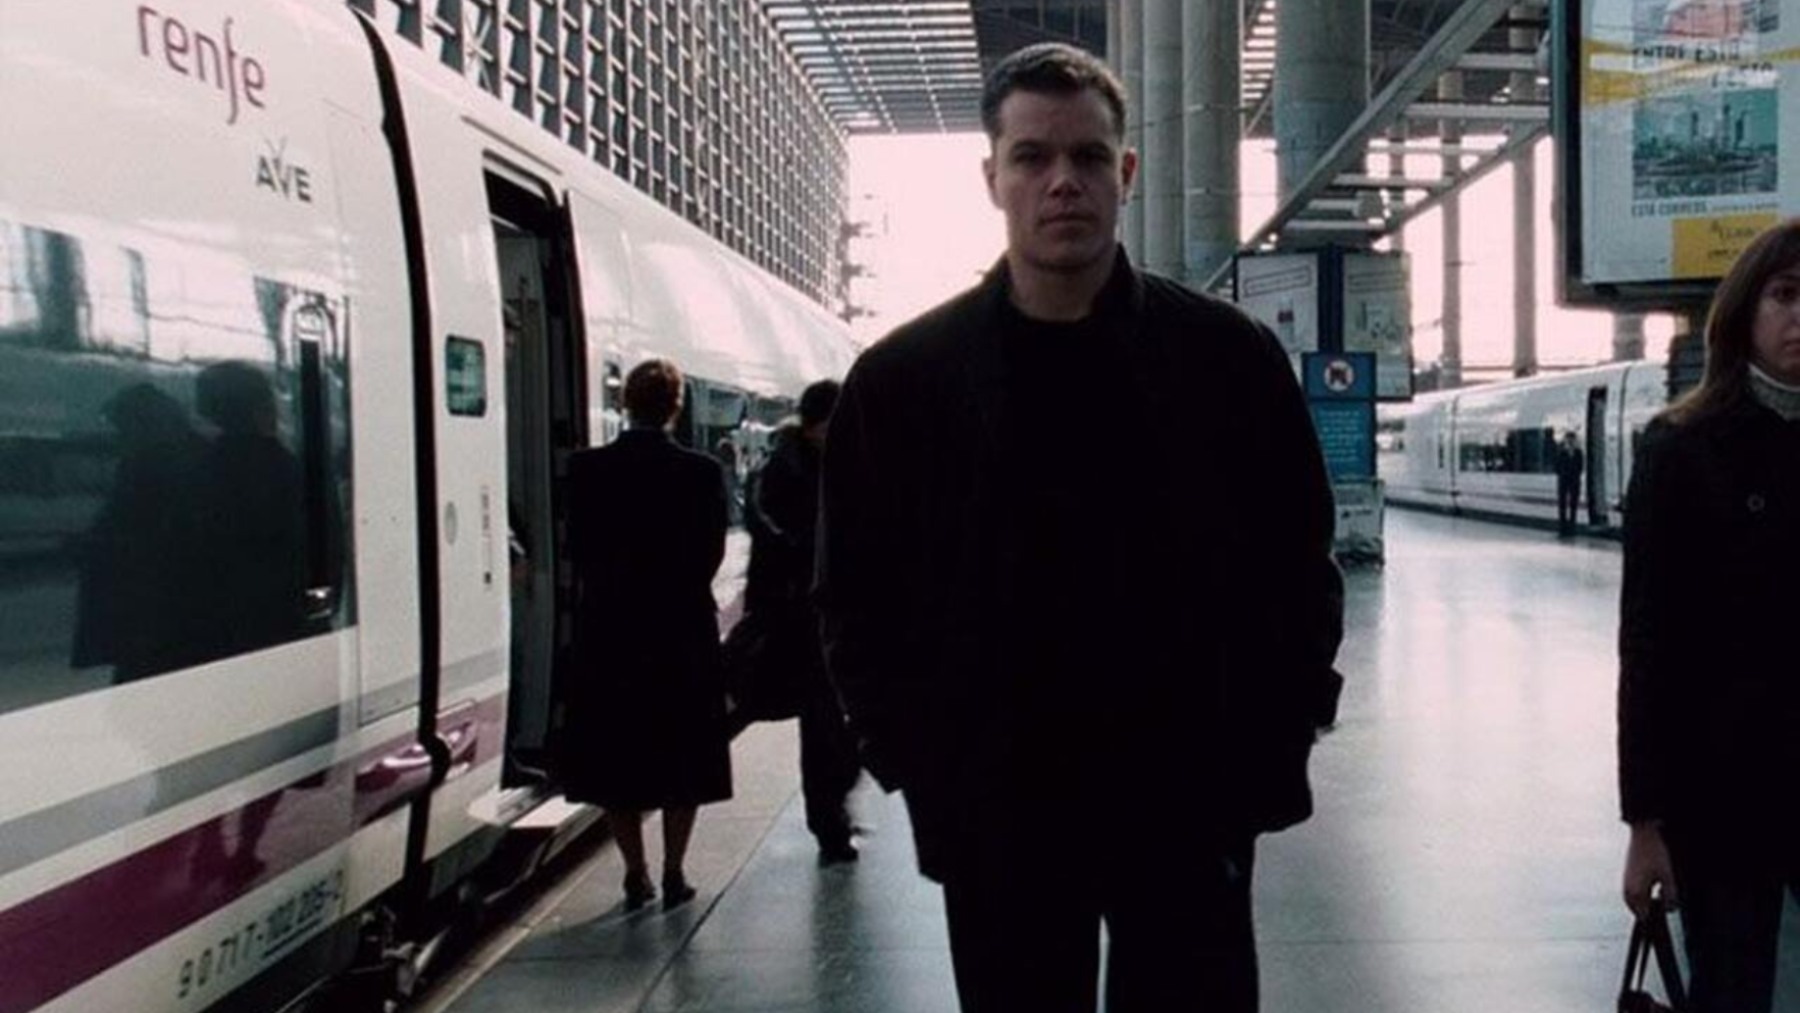 El ultimátum de Bourne, Cine, Madrid